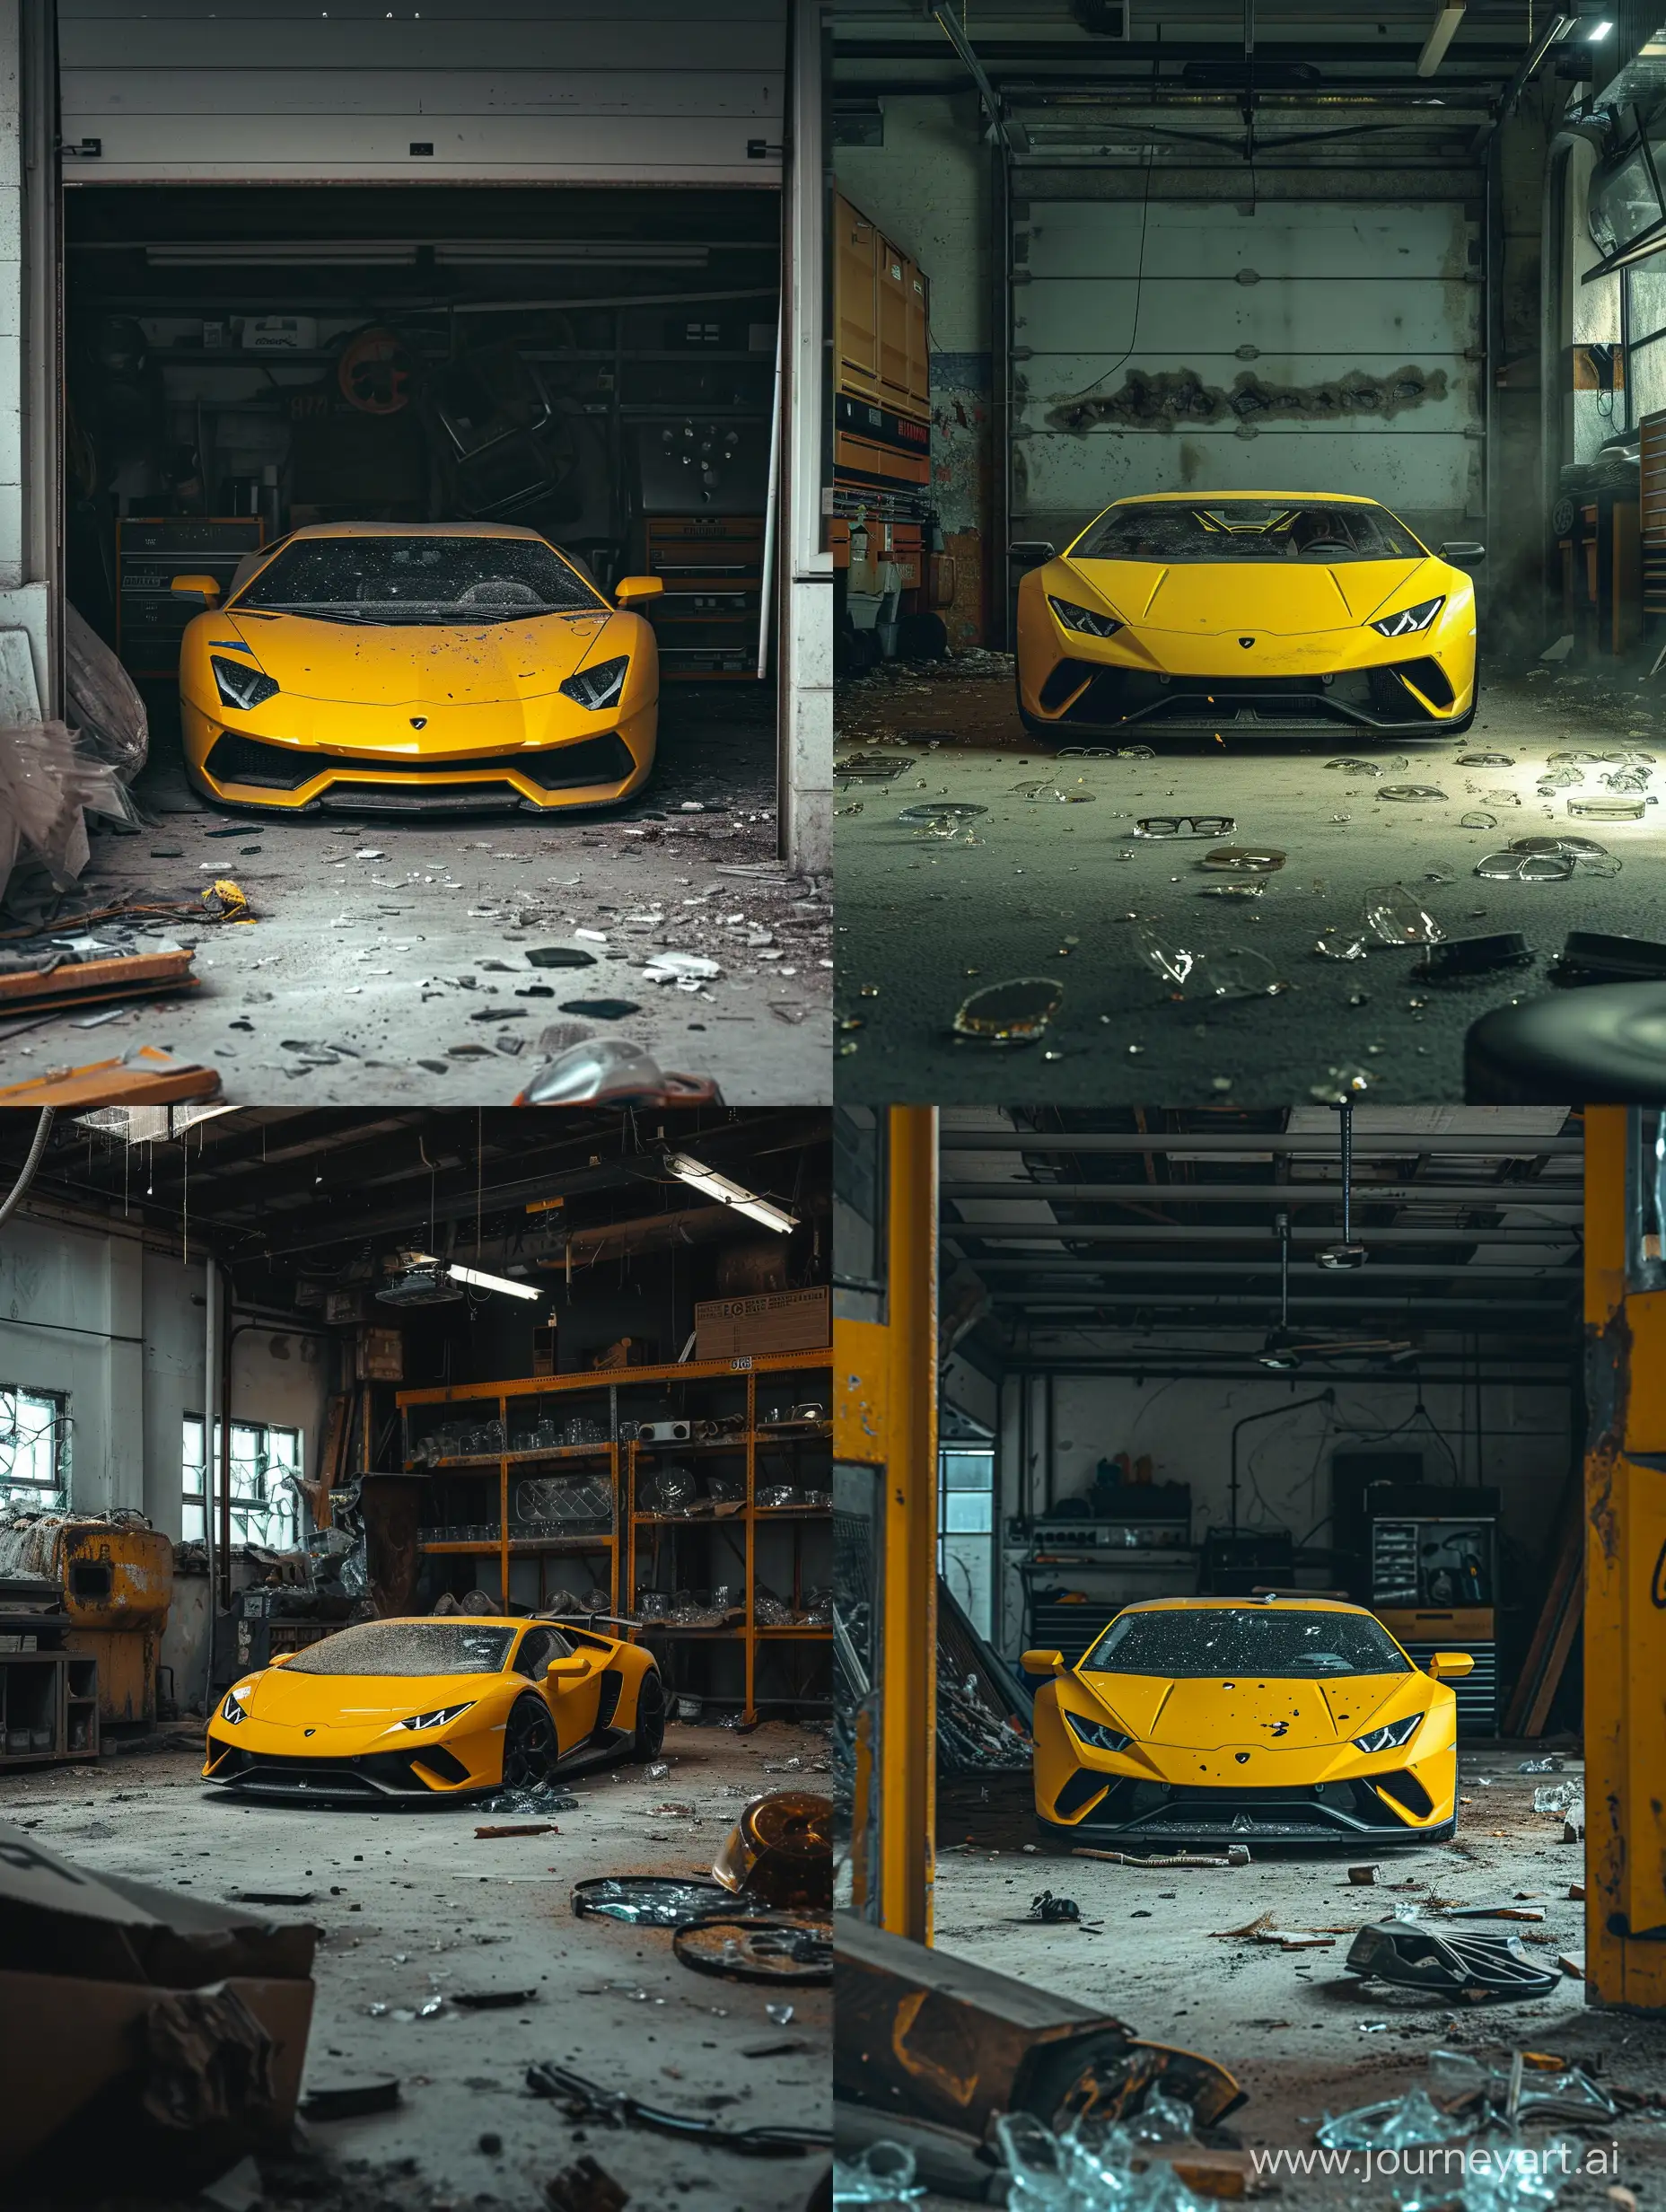 Abandoned-Yellow-Lamborghini-in-Dusty-Garage-Luxury-Car-Neglect